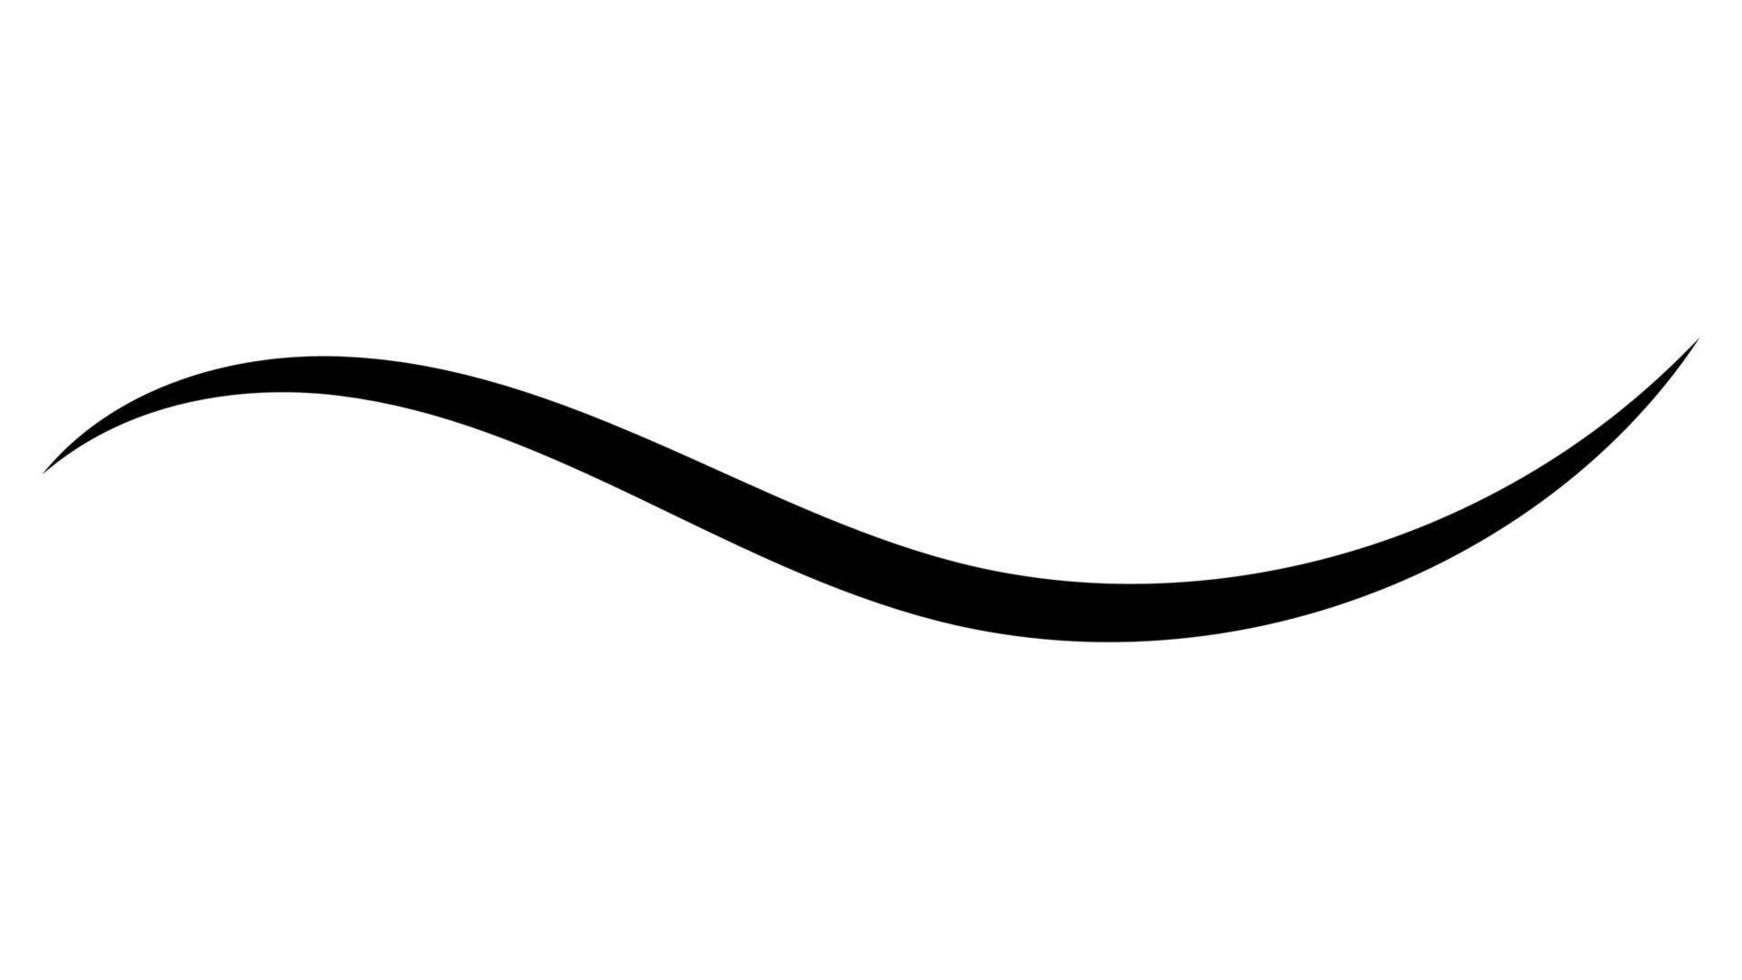 Swoosh line underline, curly calligraphy stroke, elegant decoration drawn swirl vector